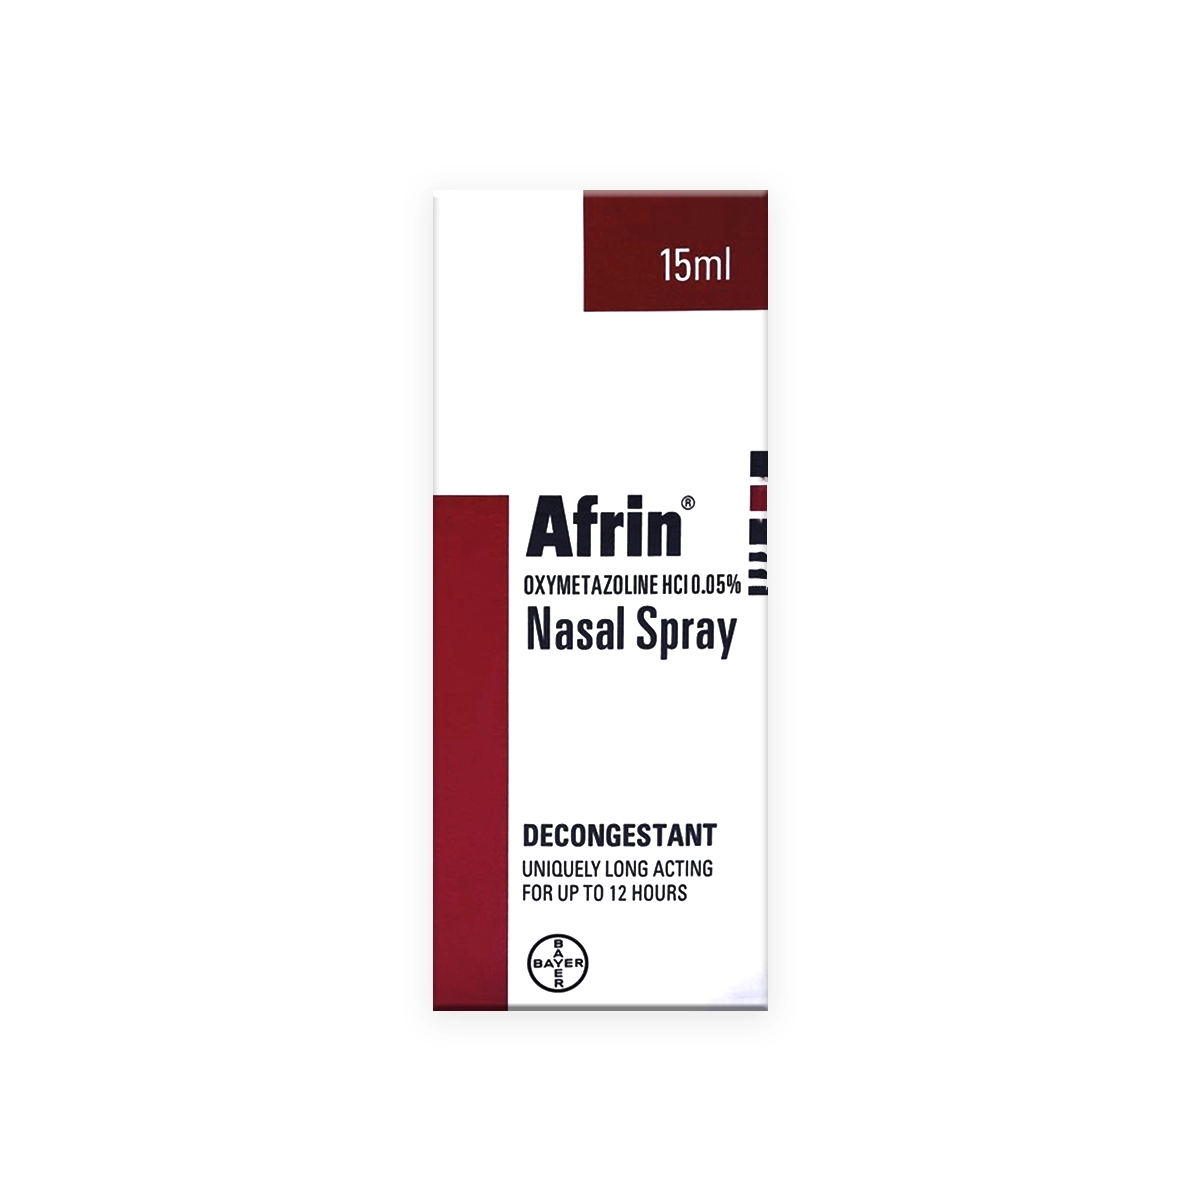 Afrin nasal spray 15ml (Oxymetazoline)